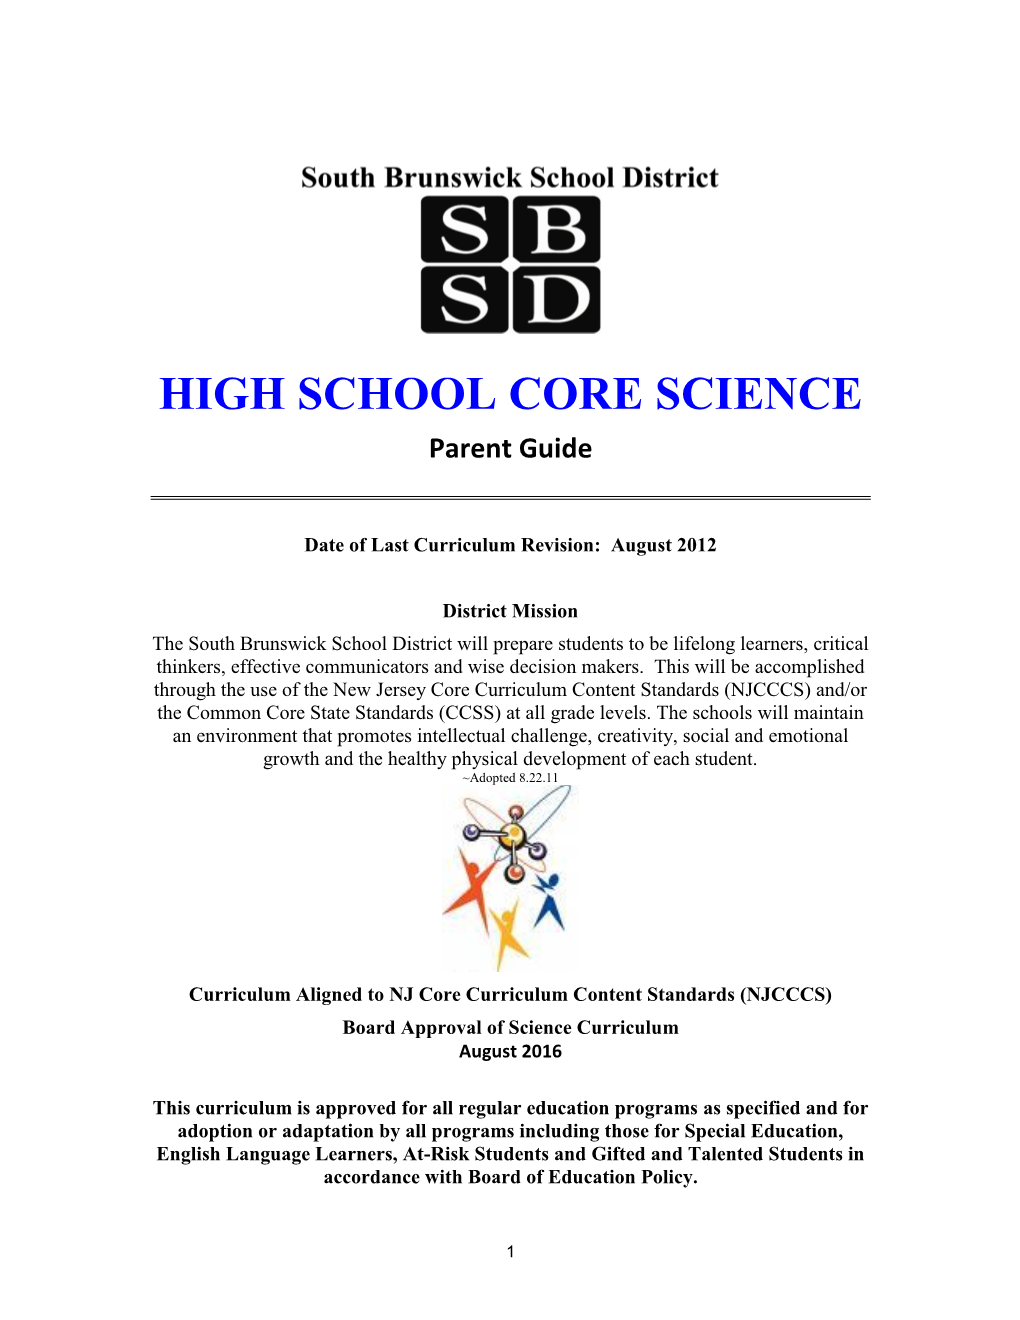 High School Core Science